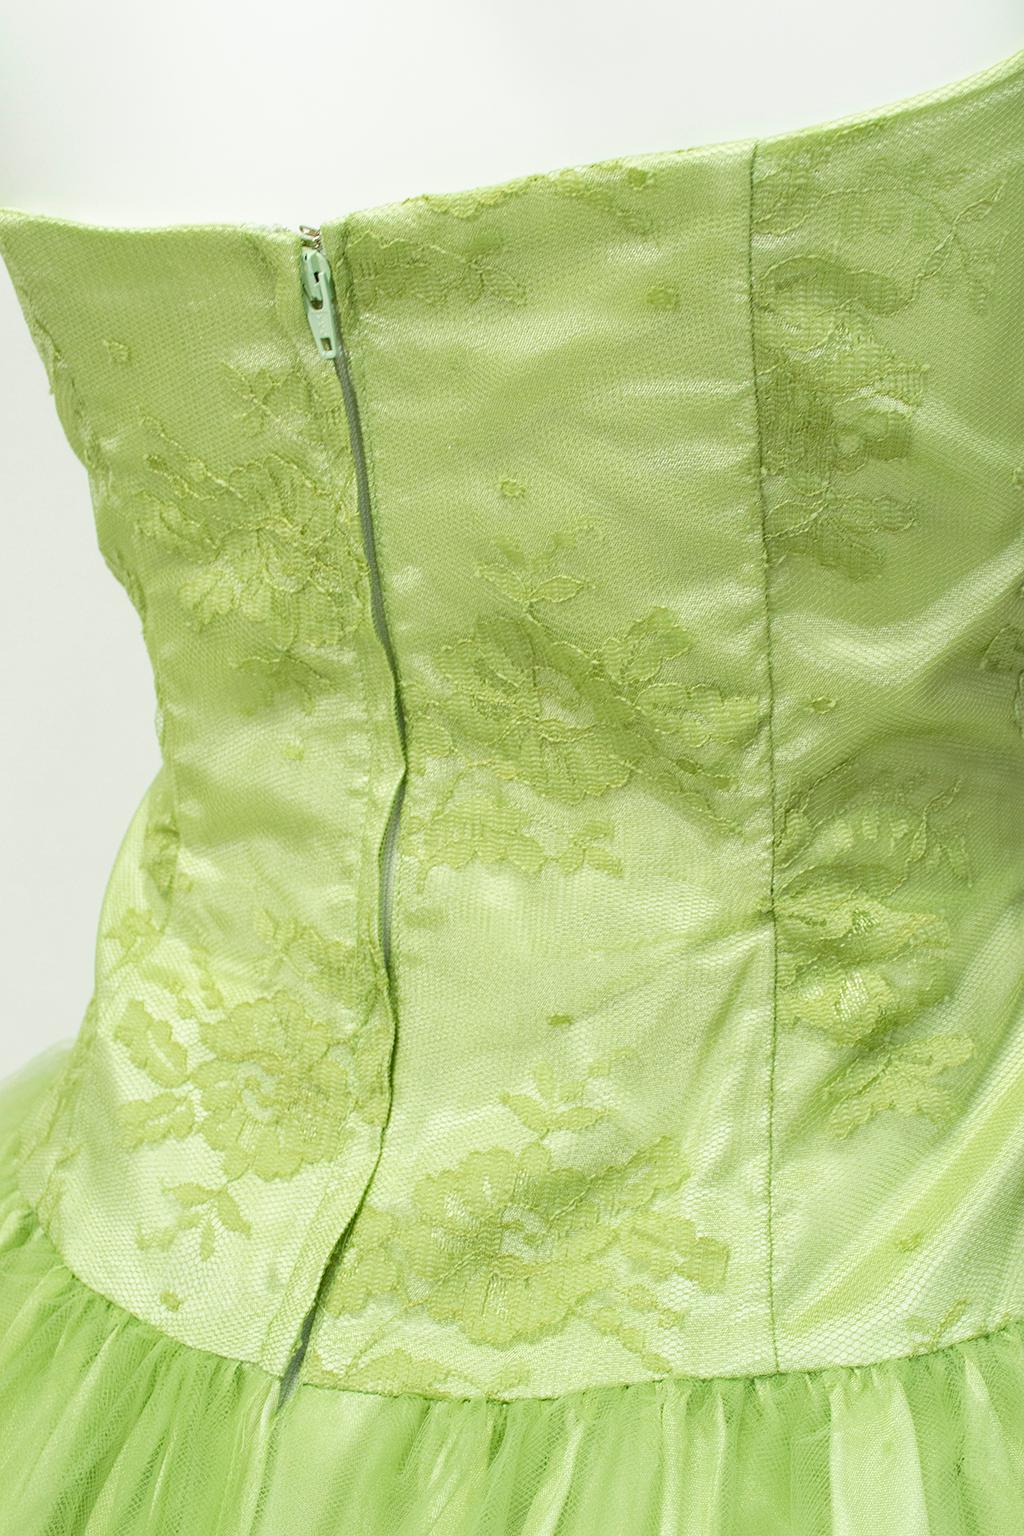 Green Jessica McClintock for Gunne Sax Strapless Lime Ballerina Dress – Small, 2003 For Sale